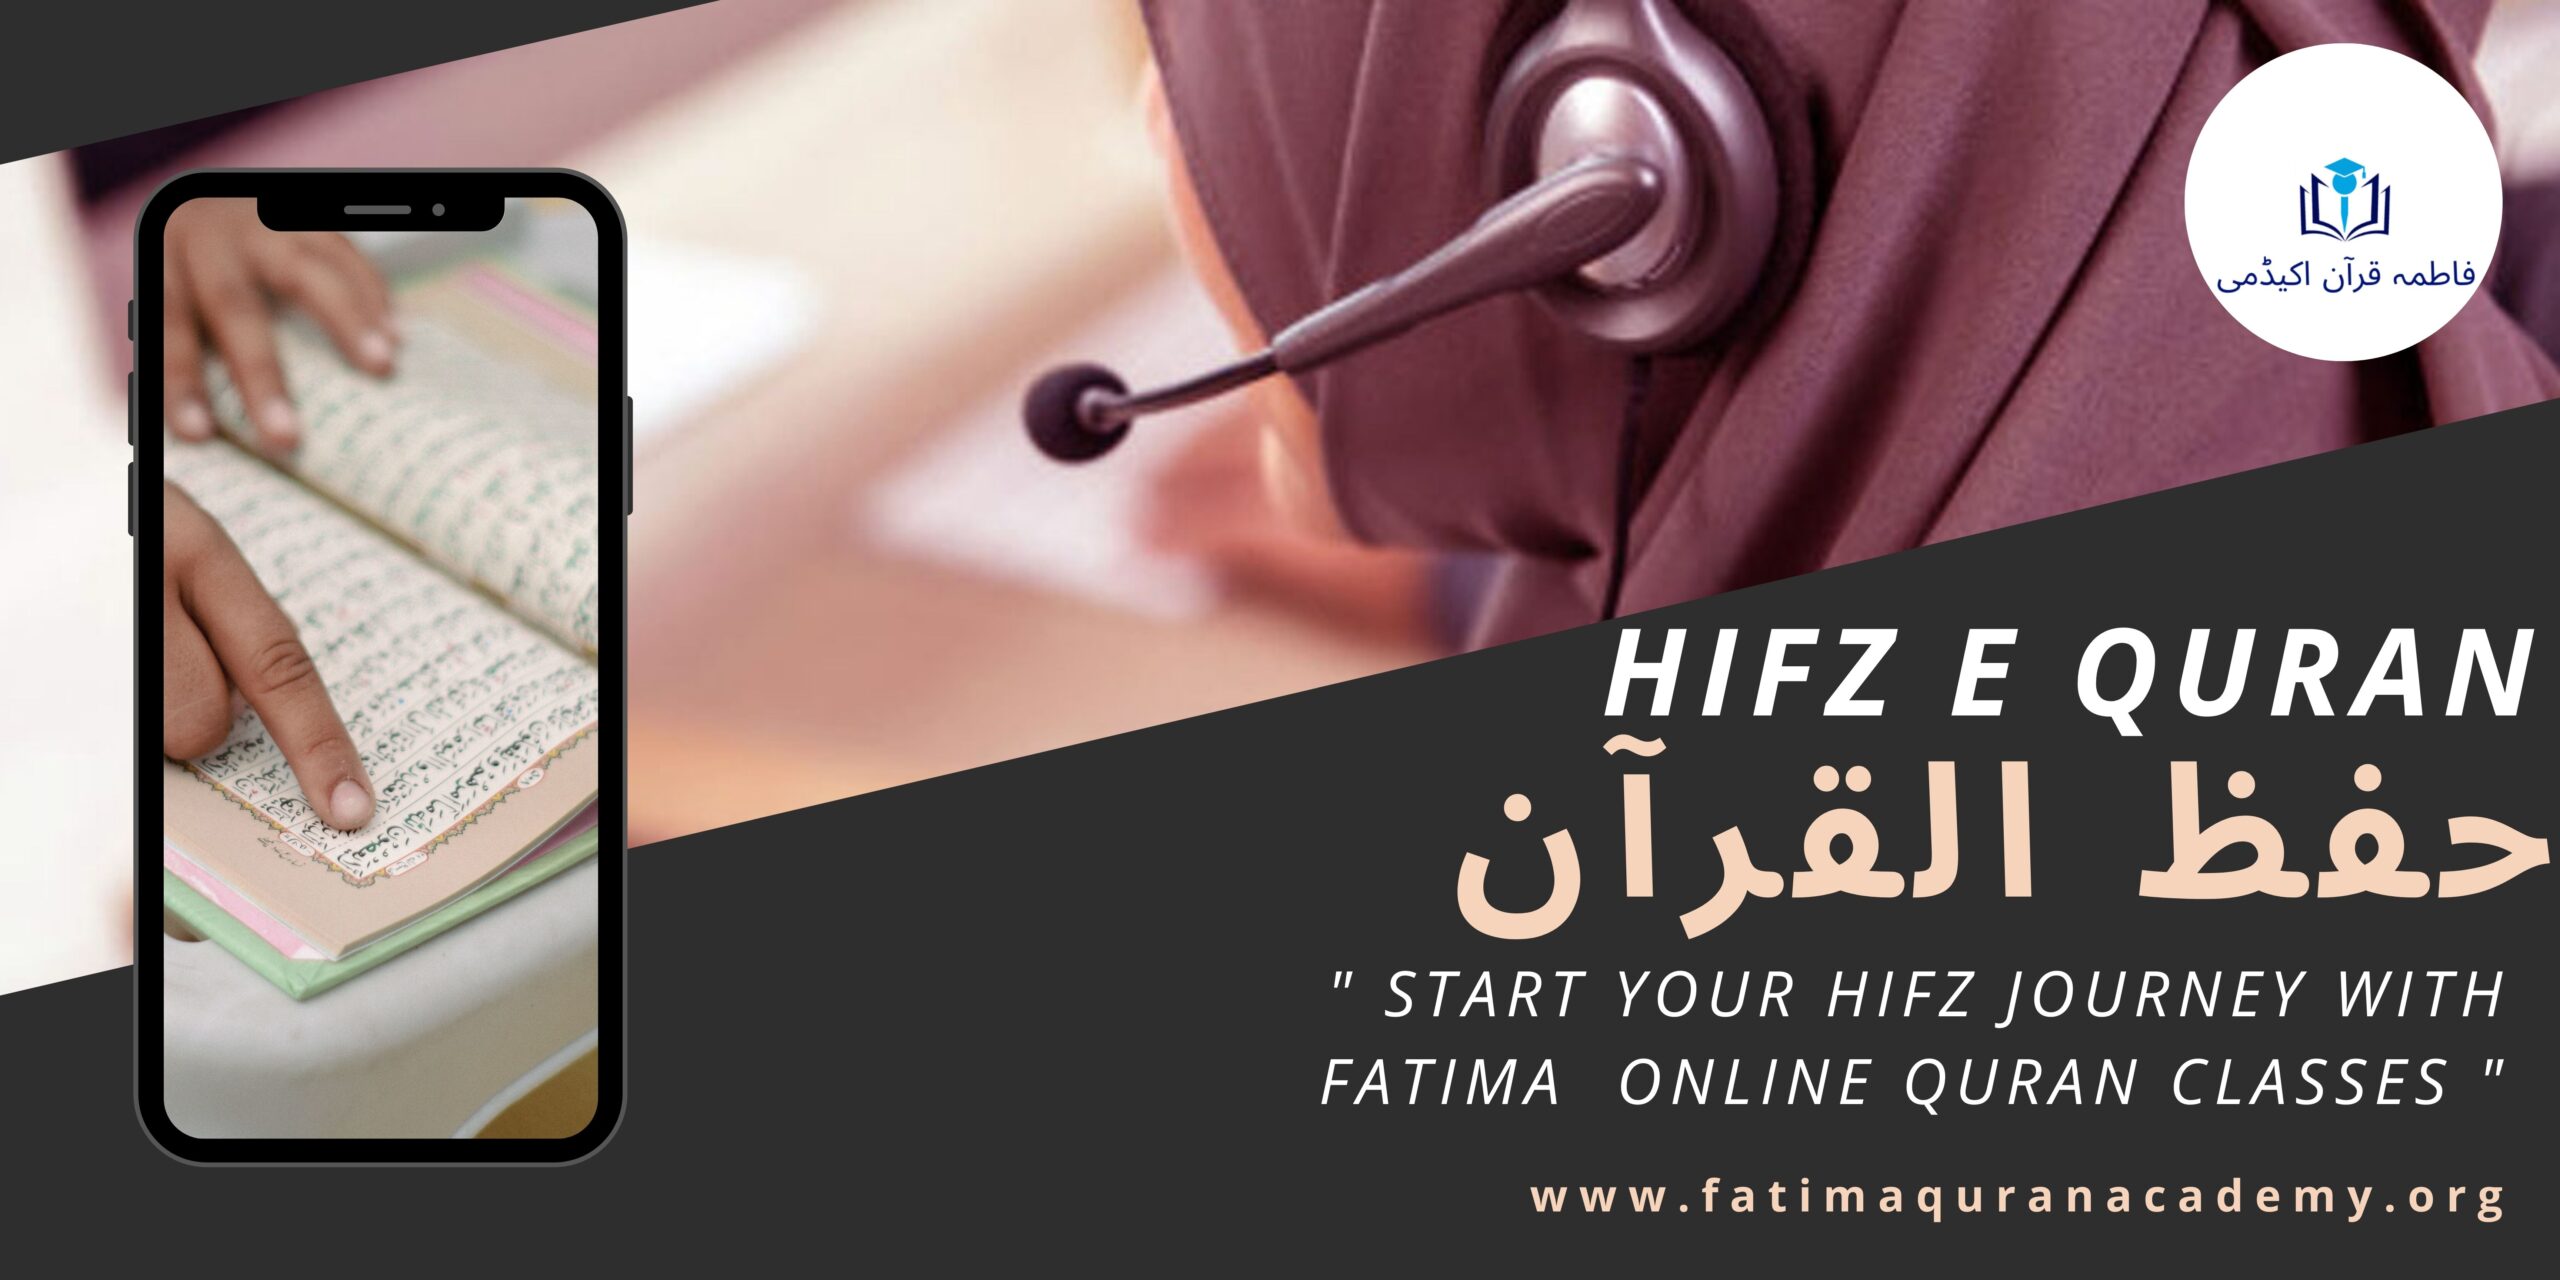 Hifz Ul Quran Course Or Qur’an Memorization Course